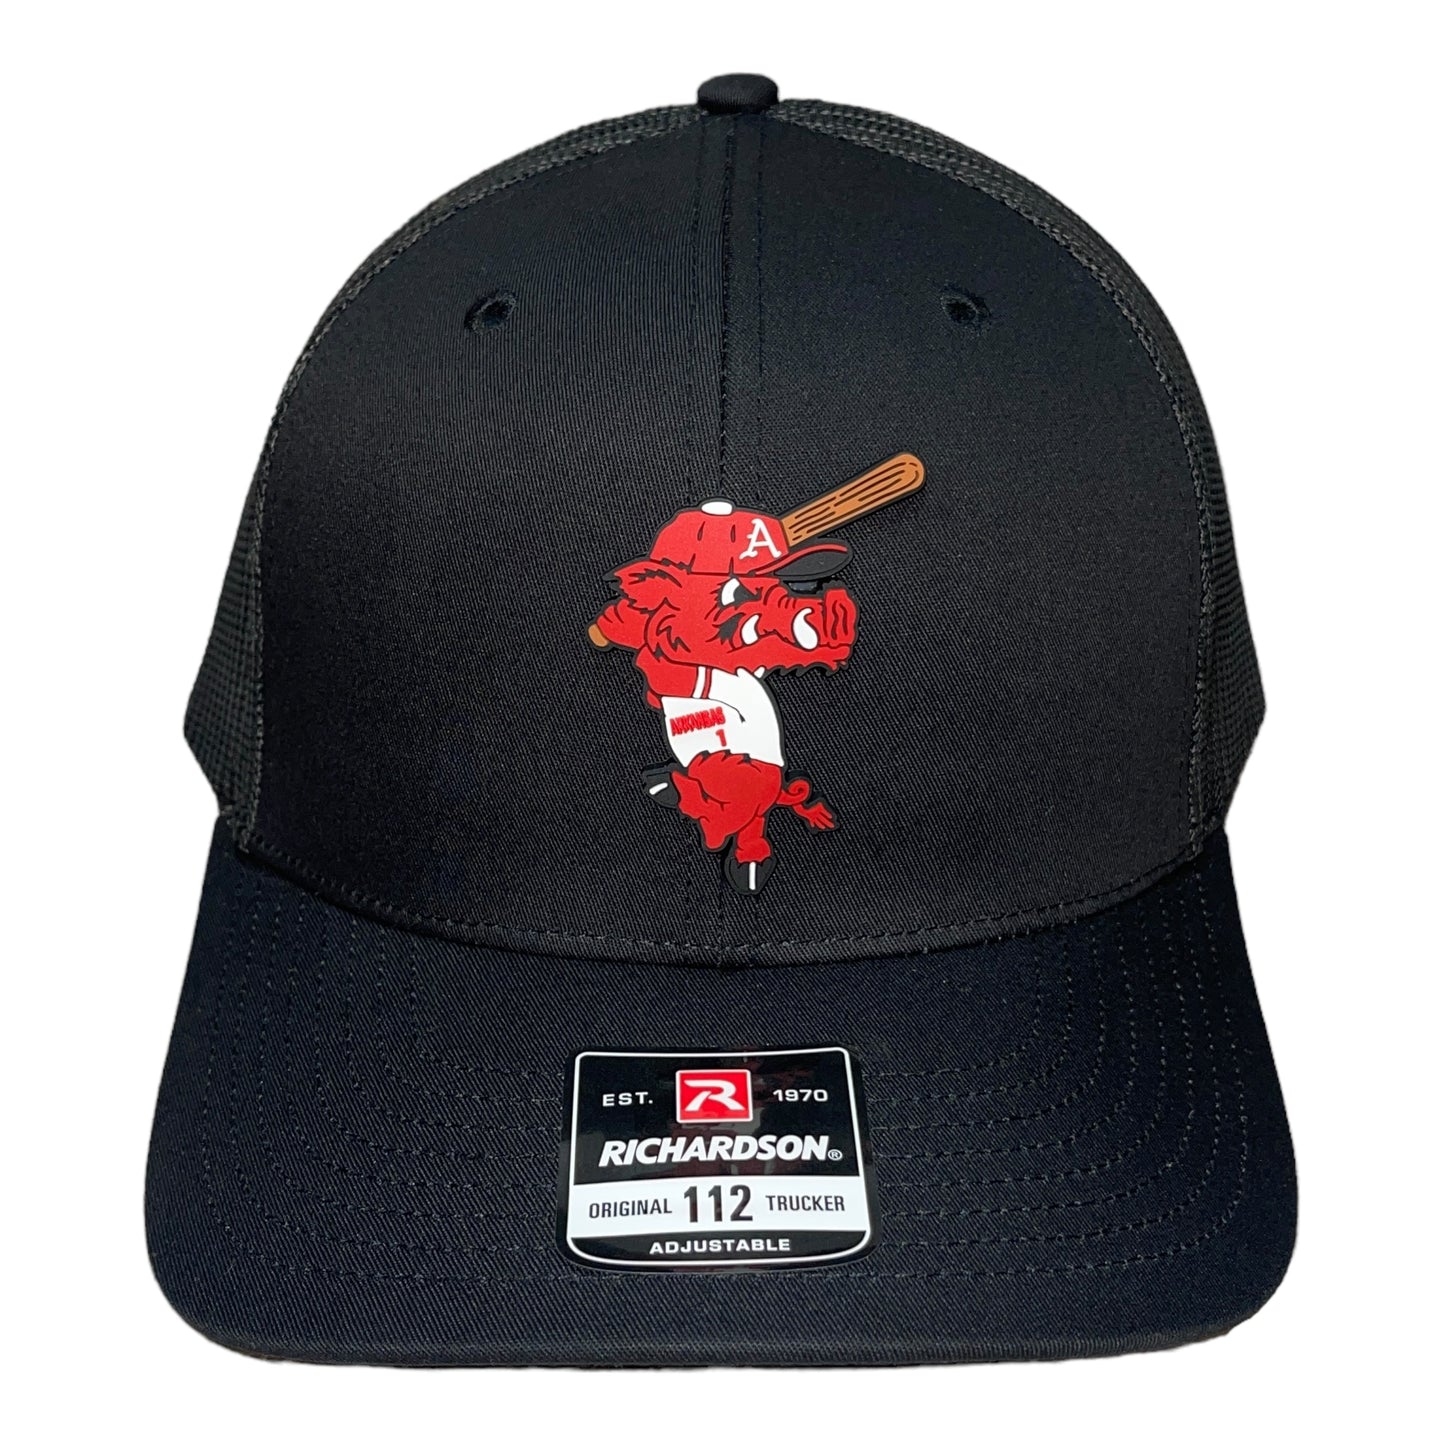 Arkansas Razorbacks Baseball Ribby at Bat 3D Snapback Trucker Hat- Black